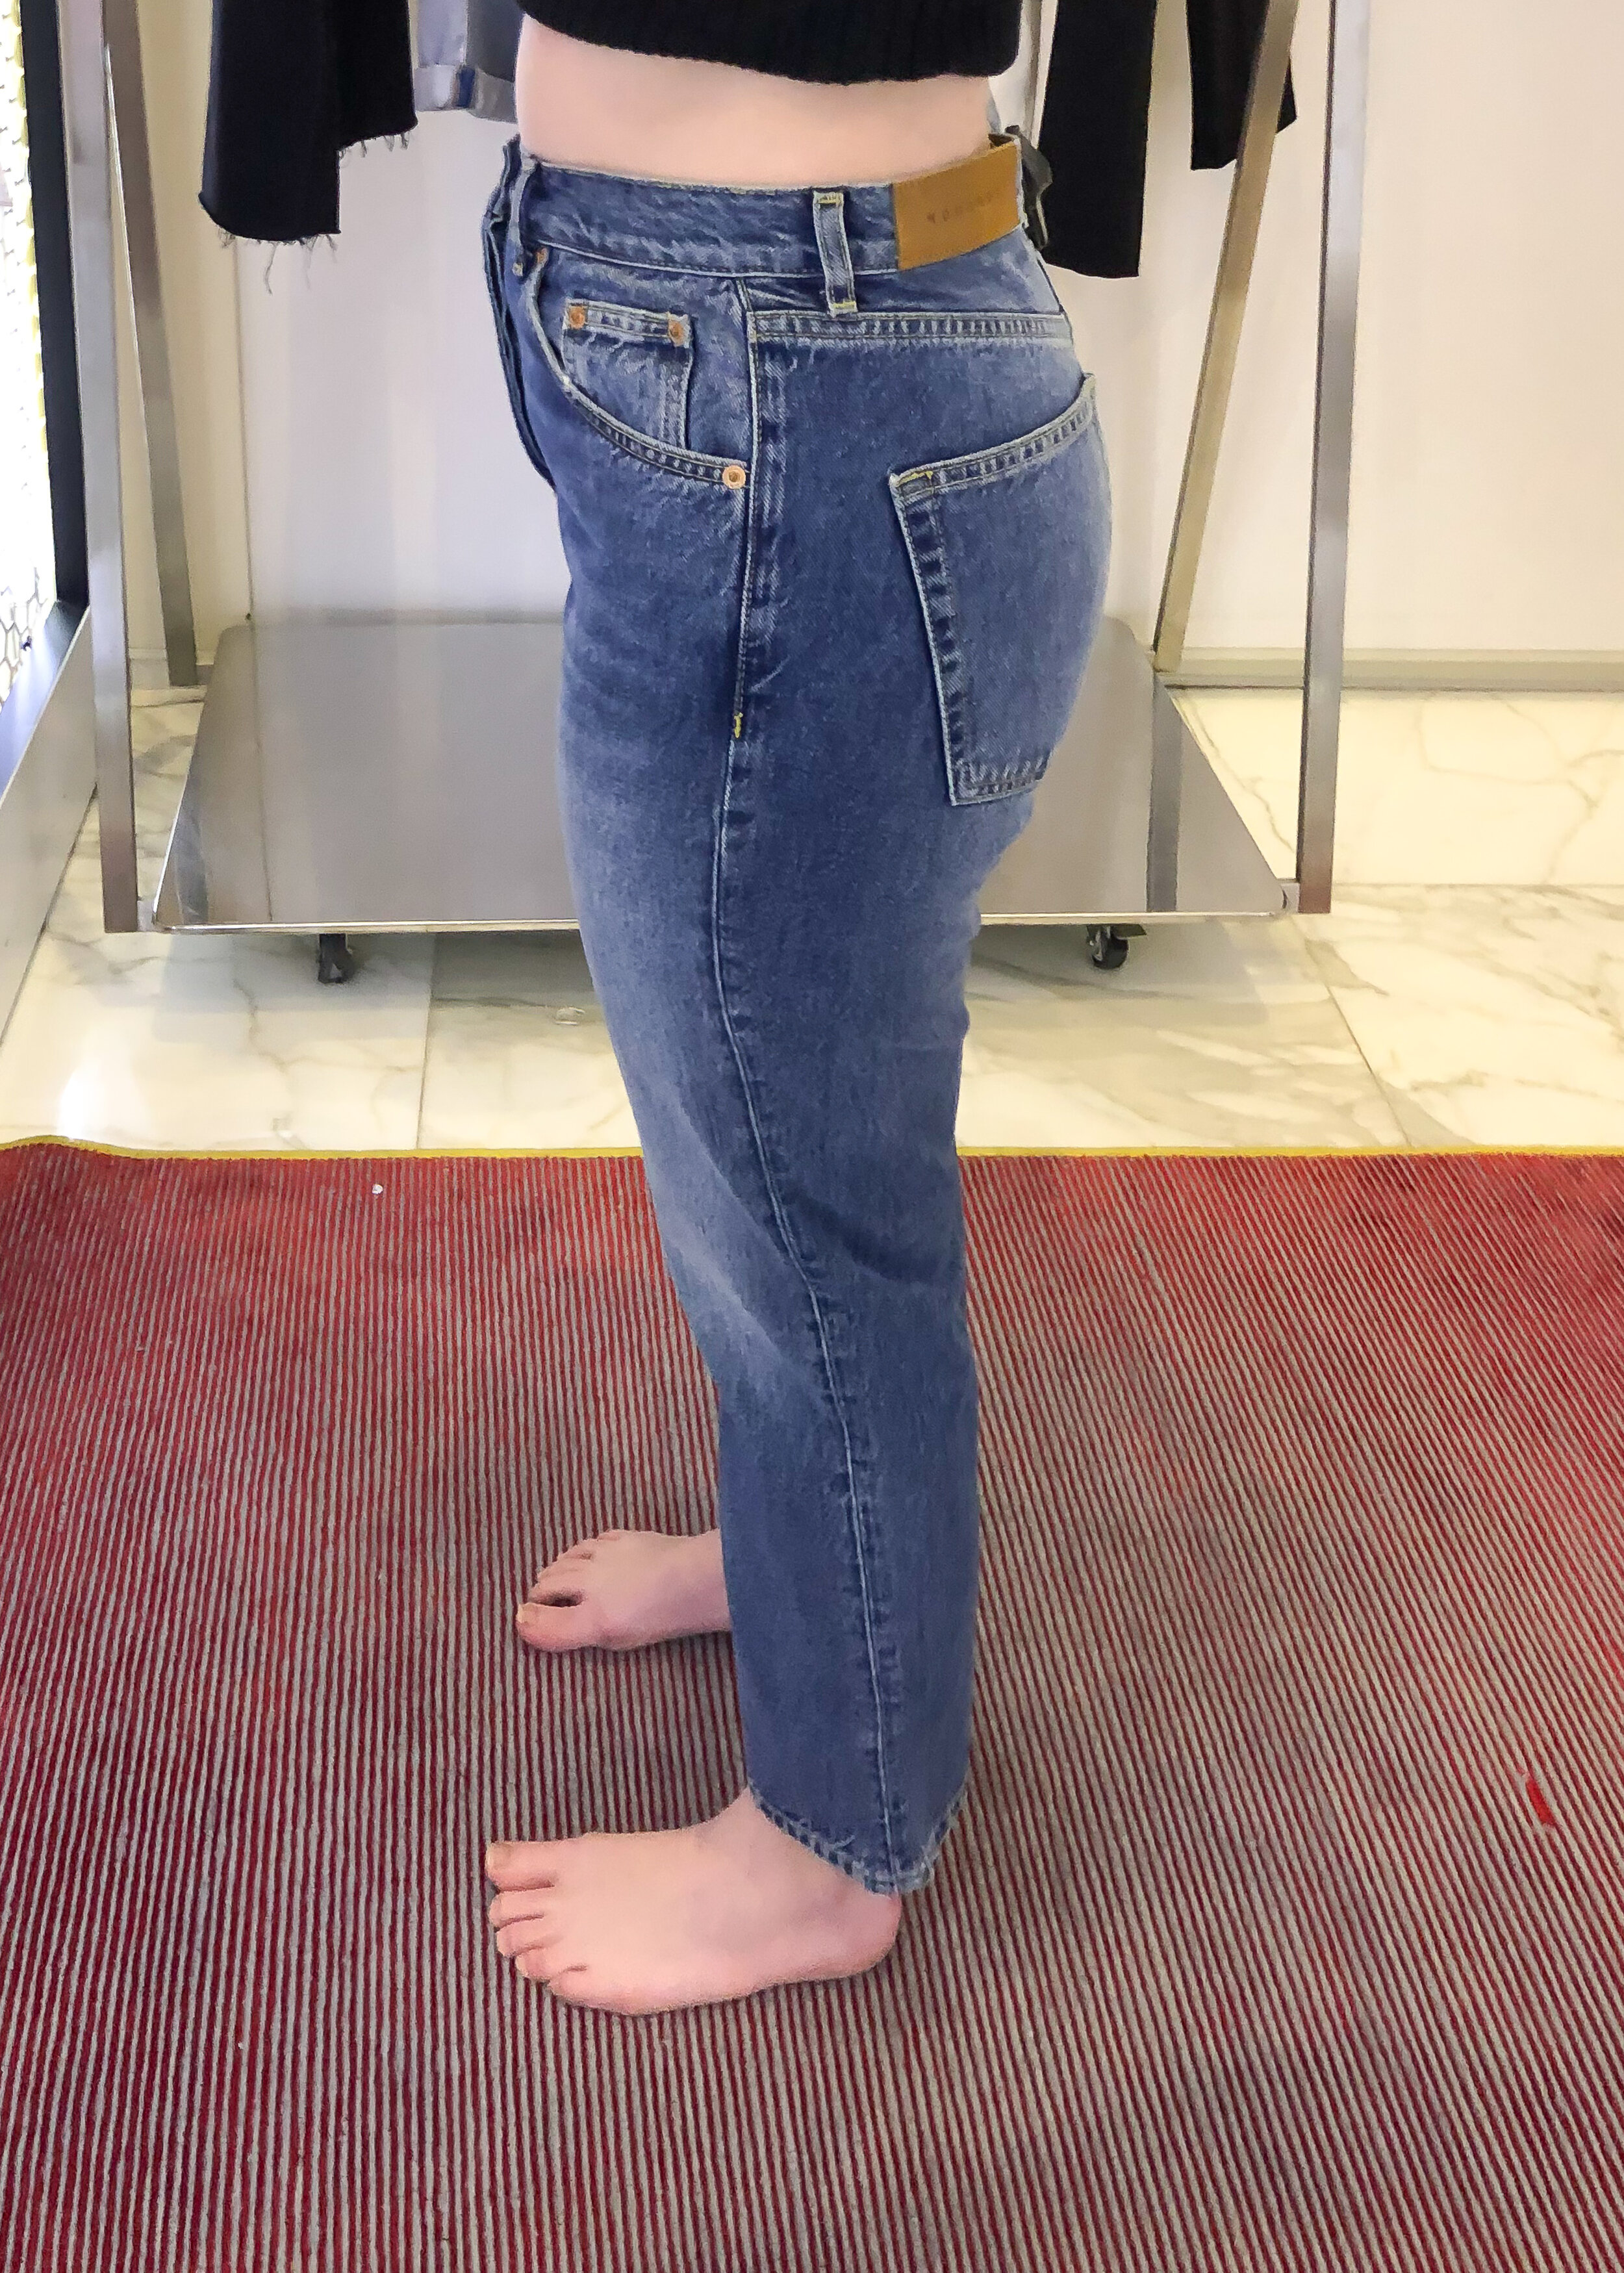 top shop jamie indigo jeans size 26 waist leg 34 40%of retail price only £21.15 